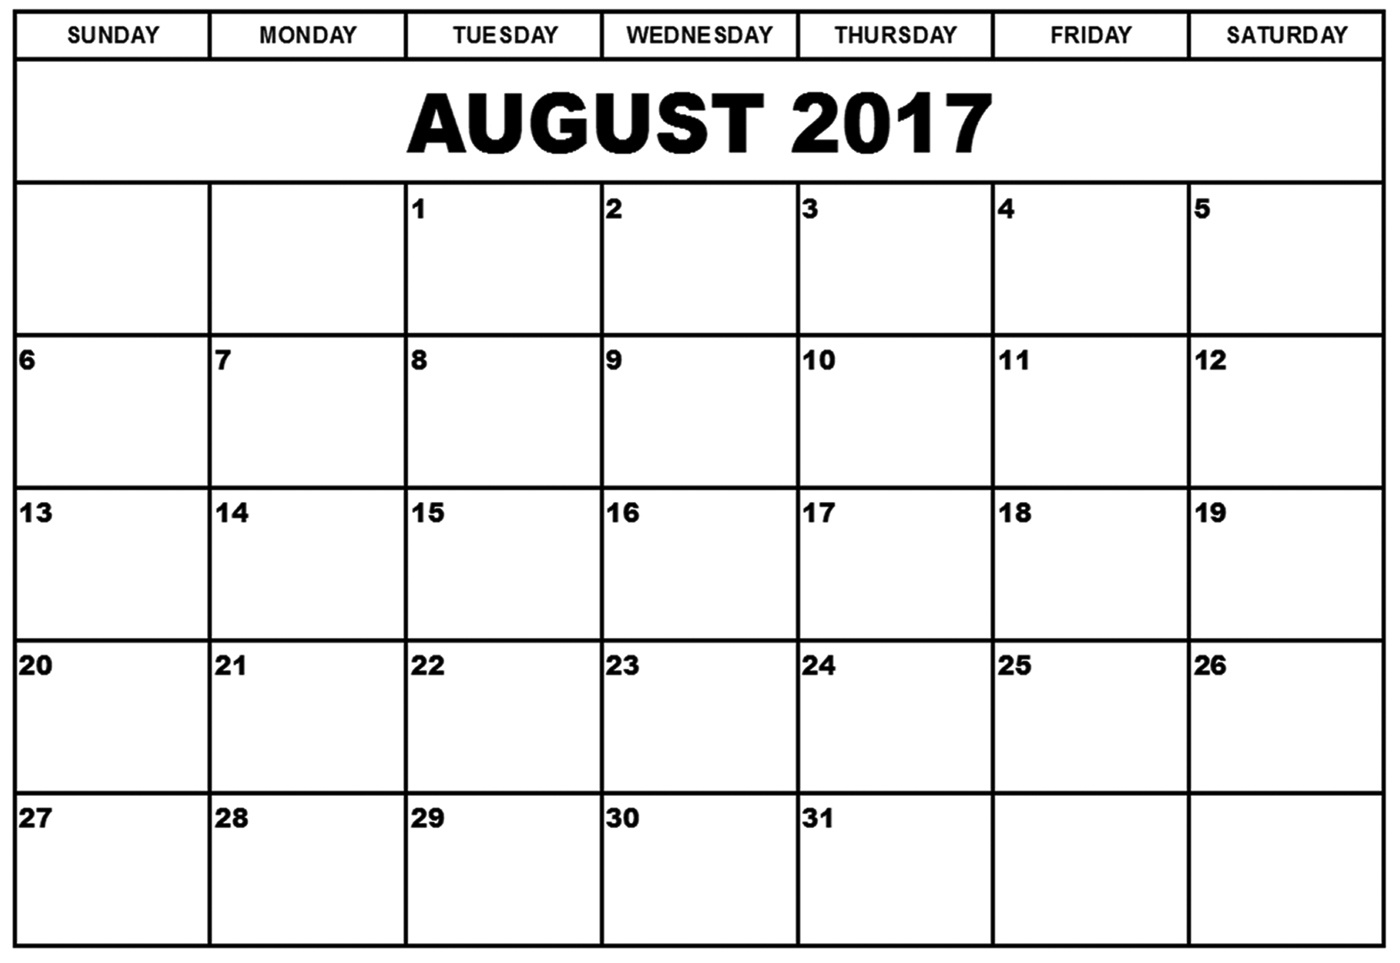 August 2017 Calendar - Printable Monthly Calendar #august2017 #calendar - Free Printable August 2017